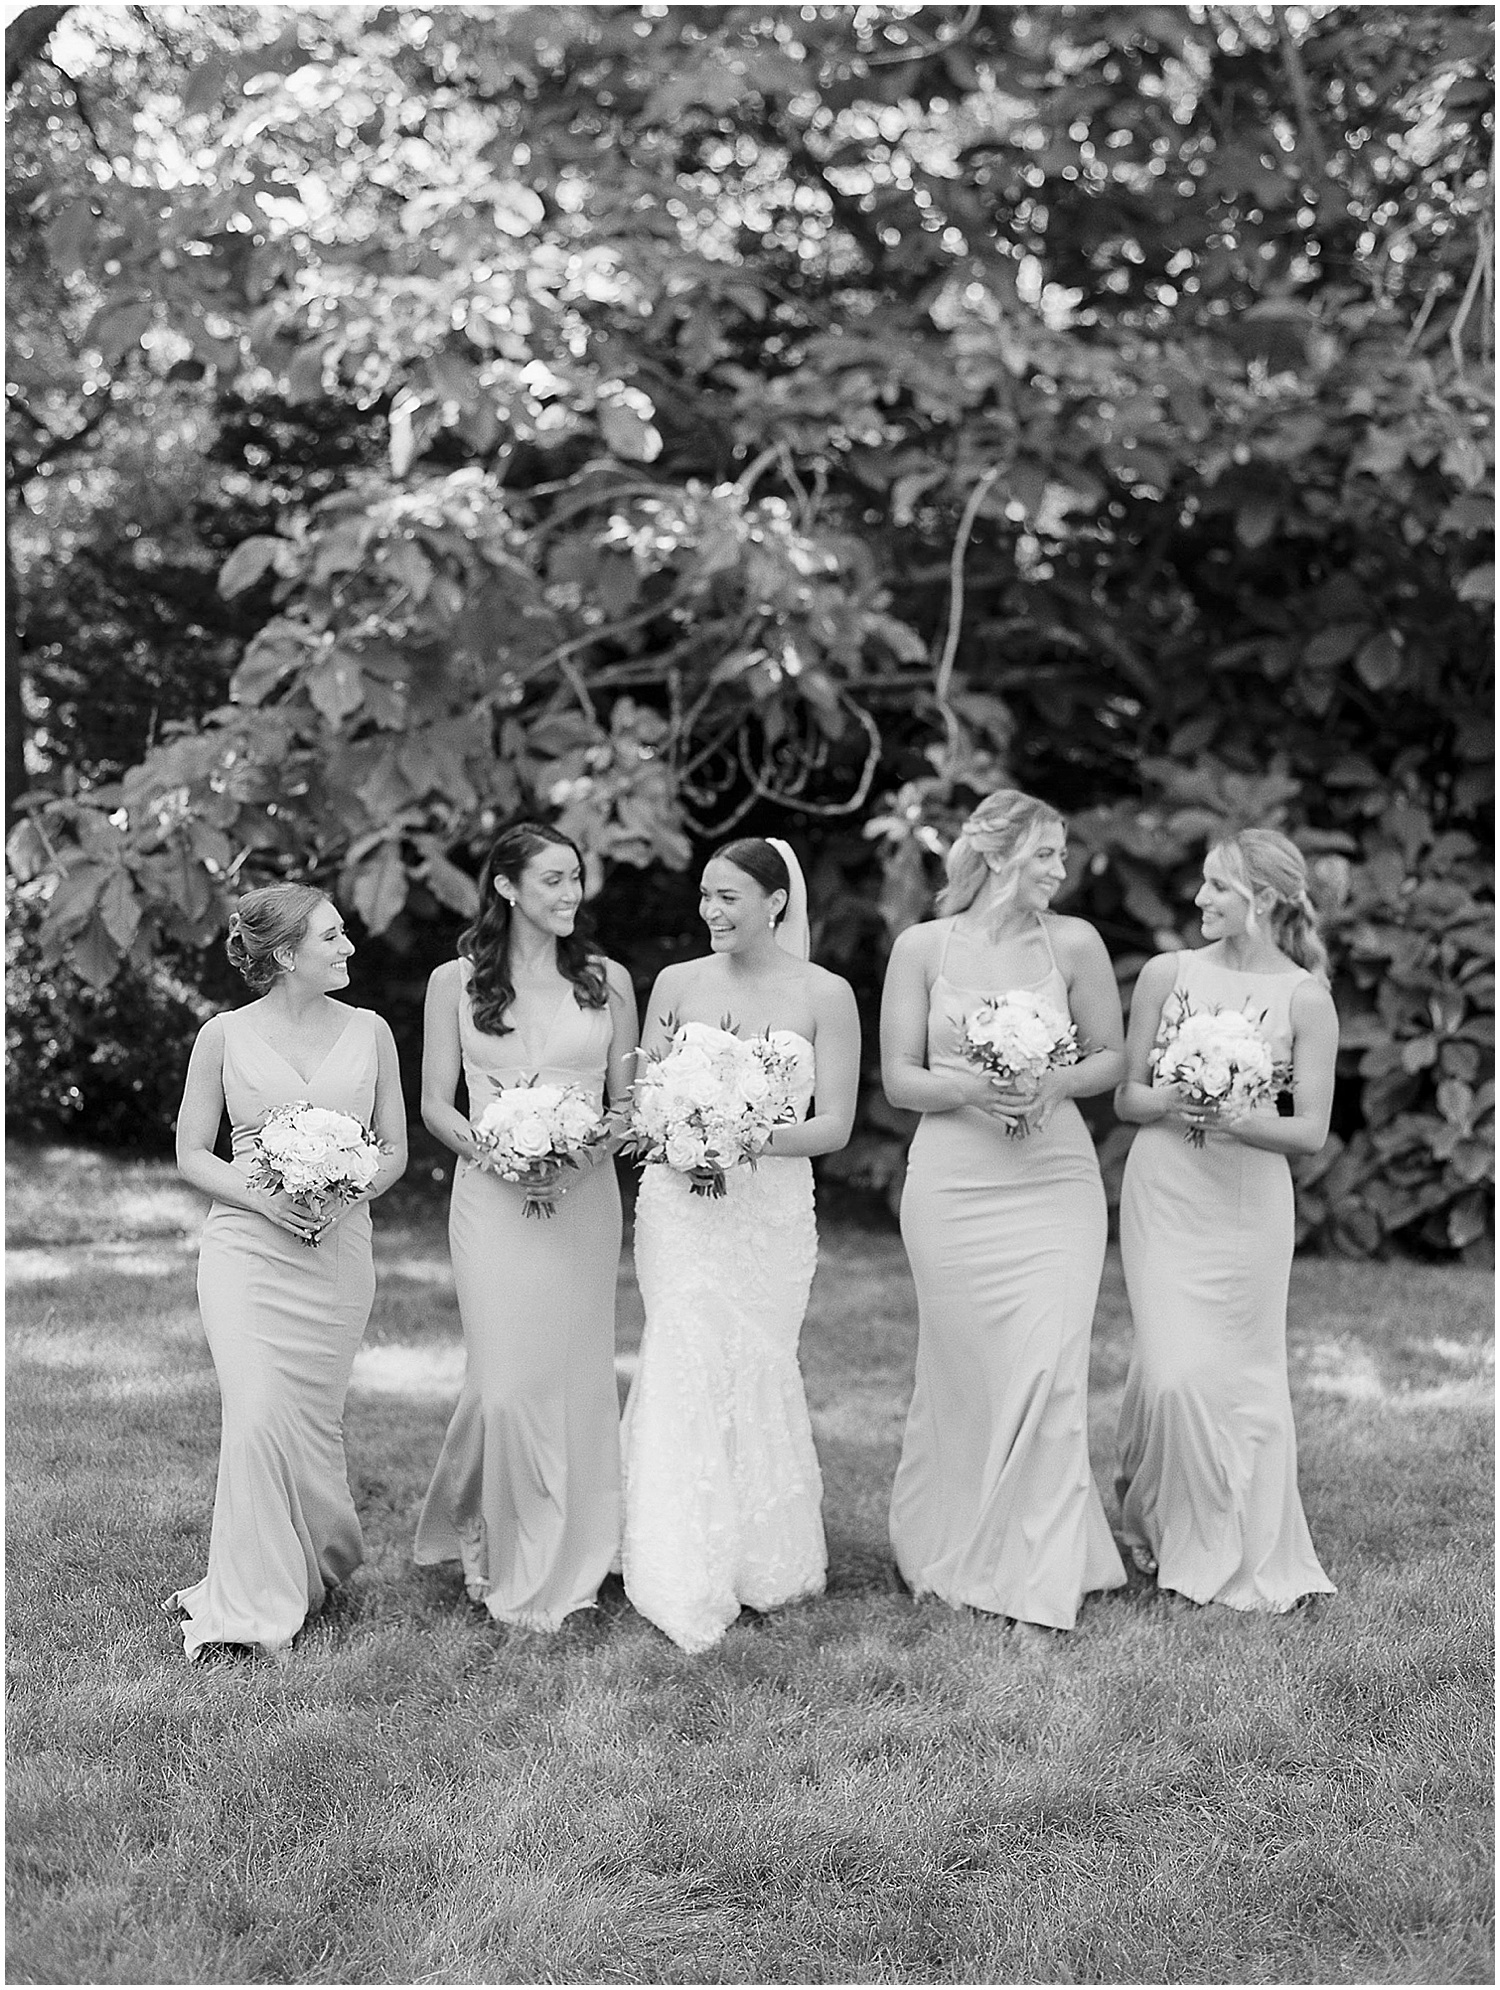 Amsale bridesmaid dresses at Glen Magna Farms Wedding in Danvers Massachusetts